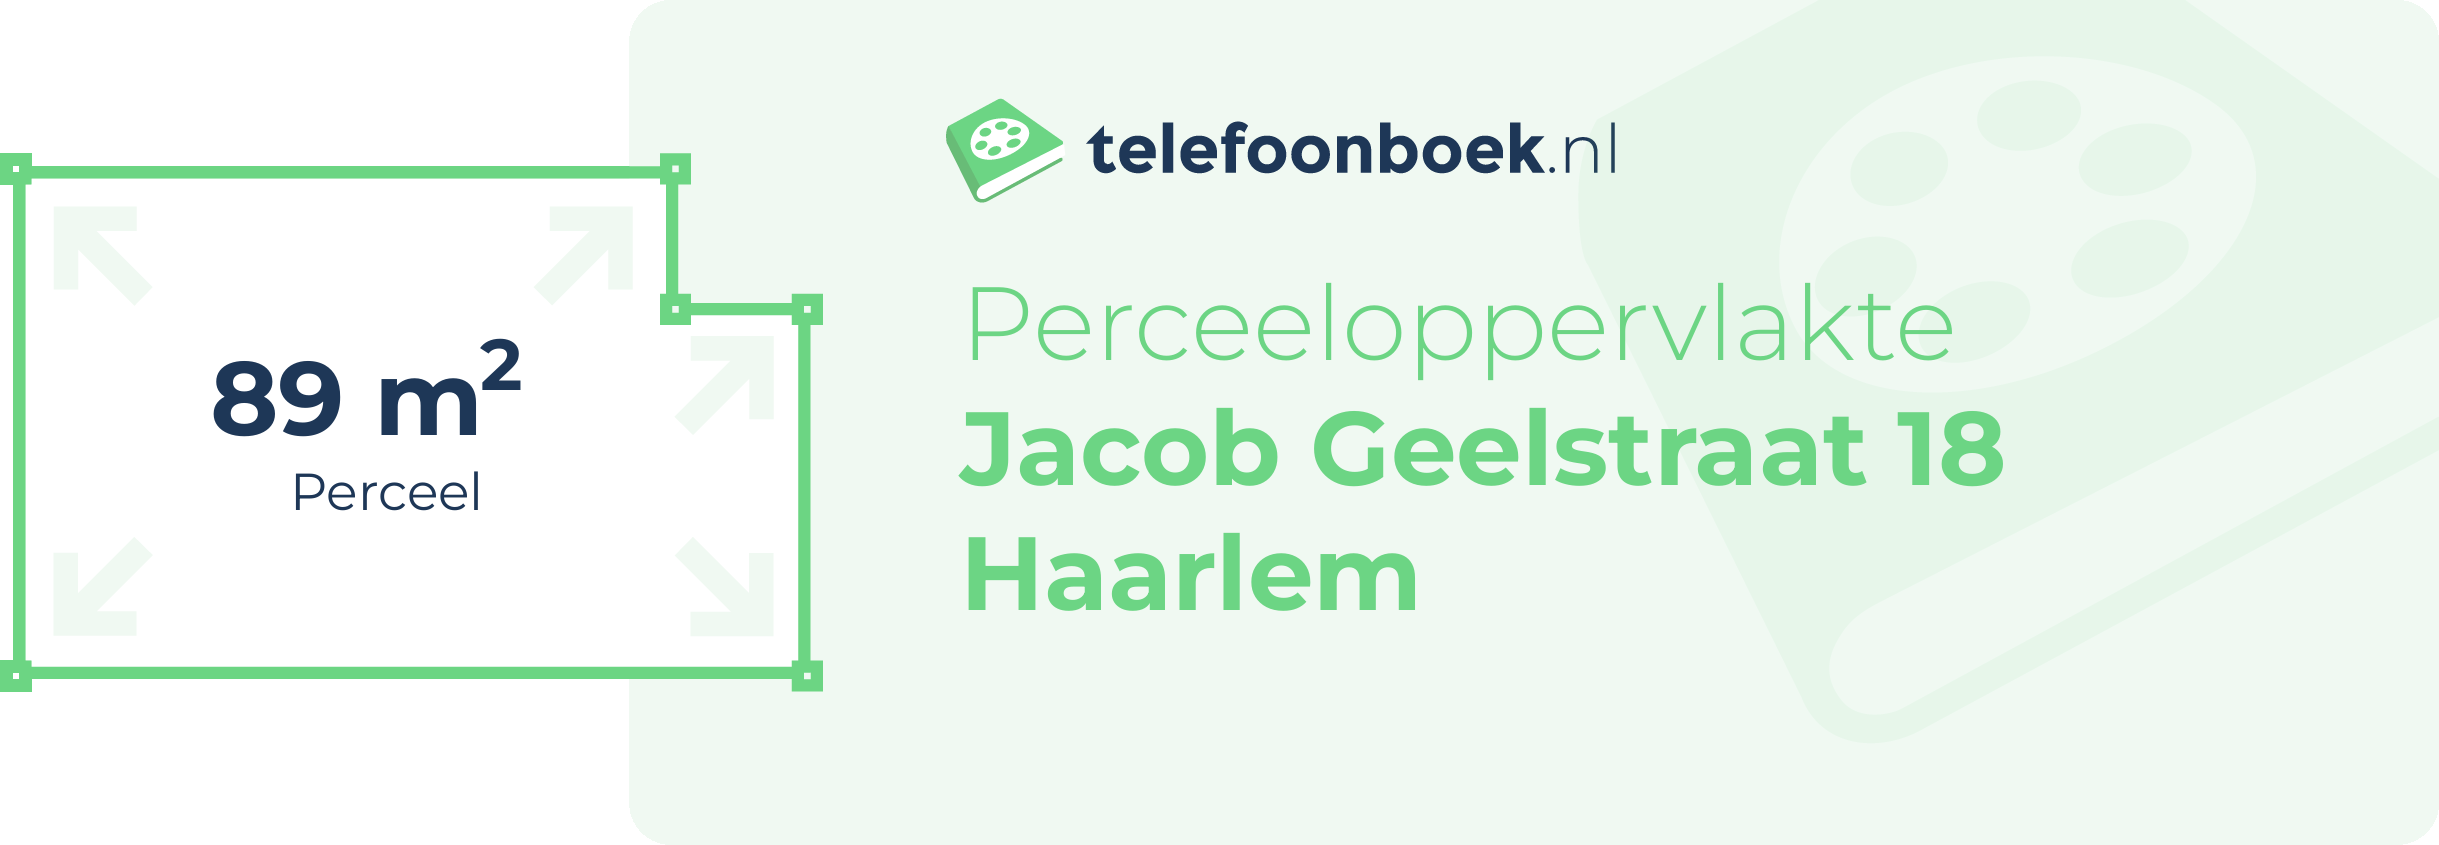 Perceeloppervlakte Jacob Geelstraat 18 Haarlem